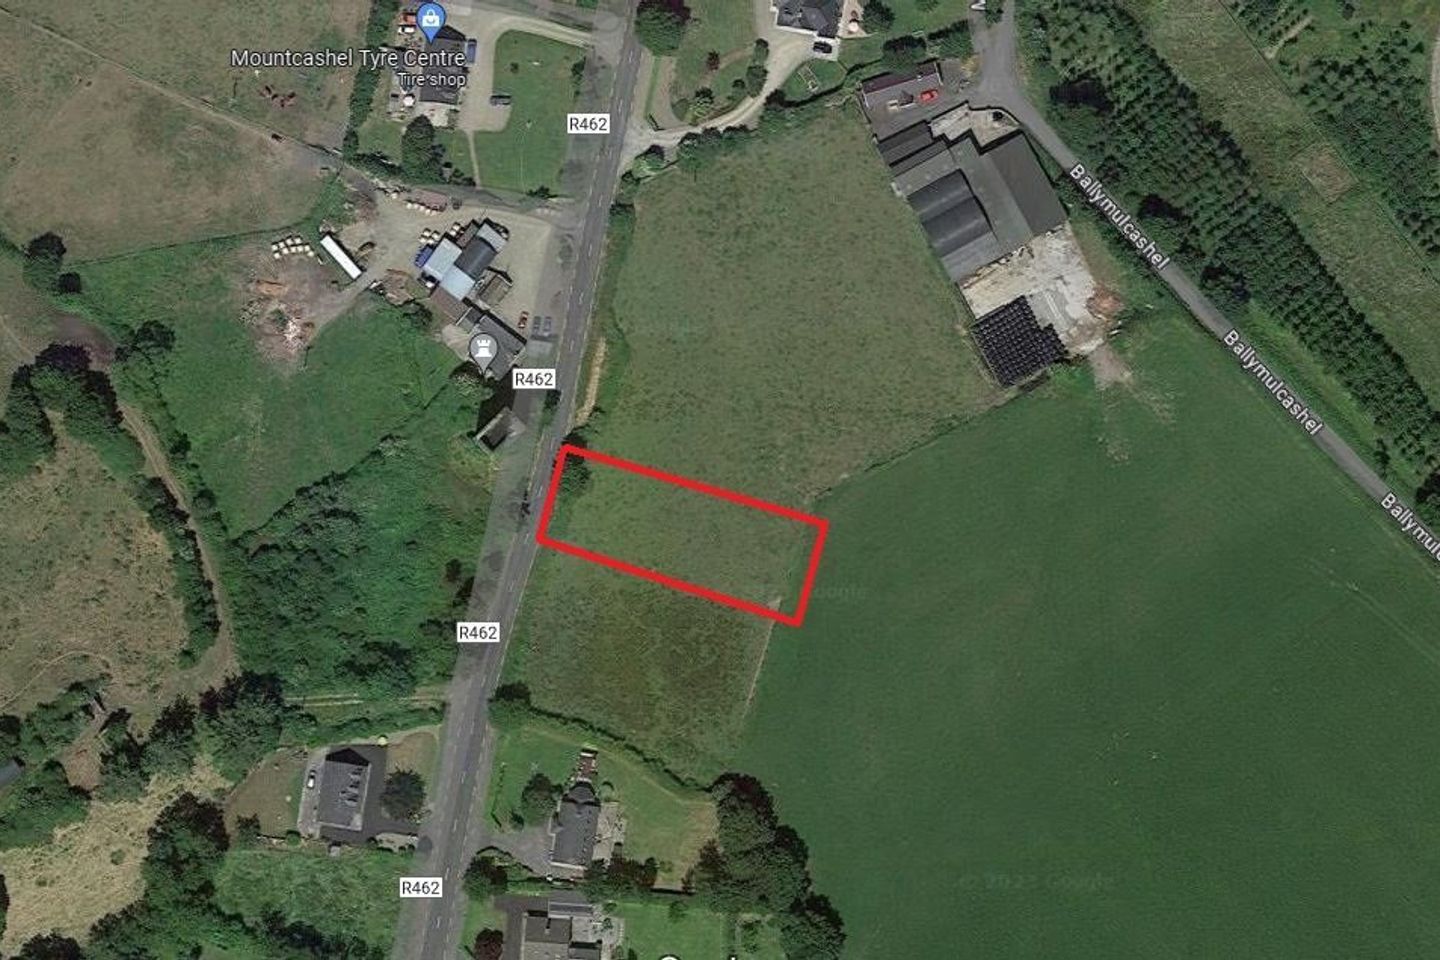 0.5 Acre Site, Ballymulcashel, Killmurry, Sixmilebridge, Co. Clare